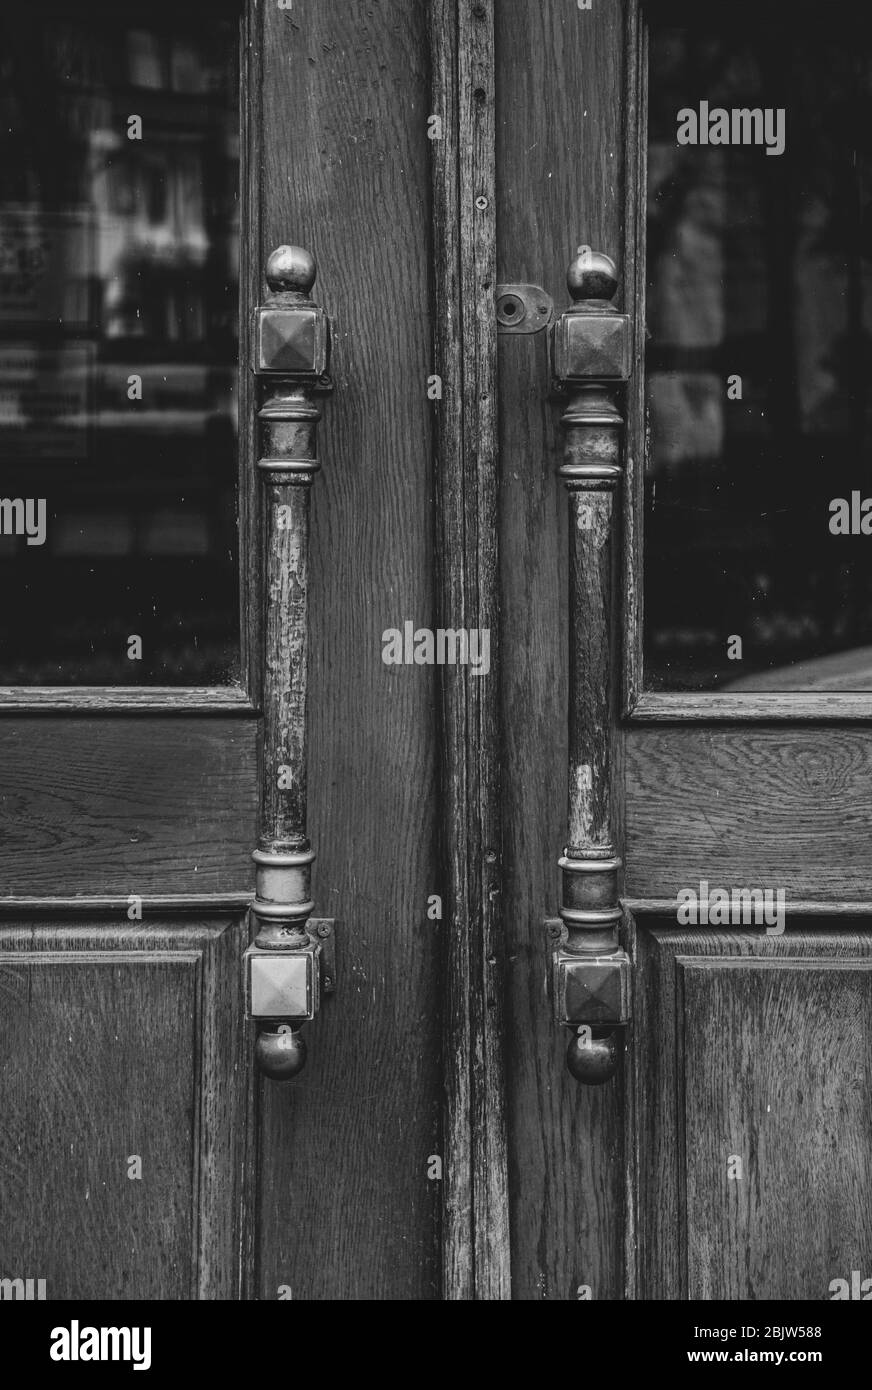 Black and white photo of vintage ornate metal door handles of wooden double door in European city. Symmetric handles and wood texture of old door with Stock Photo